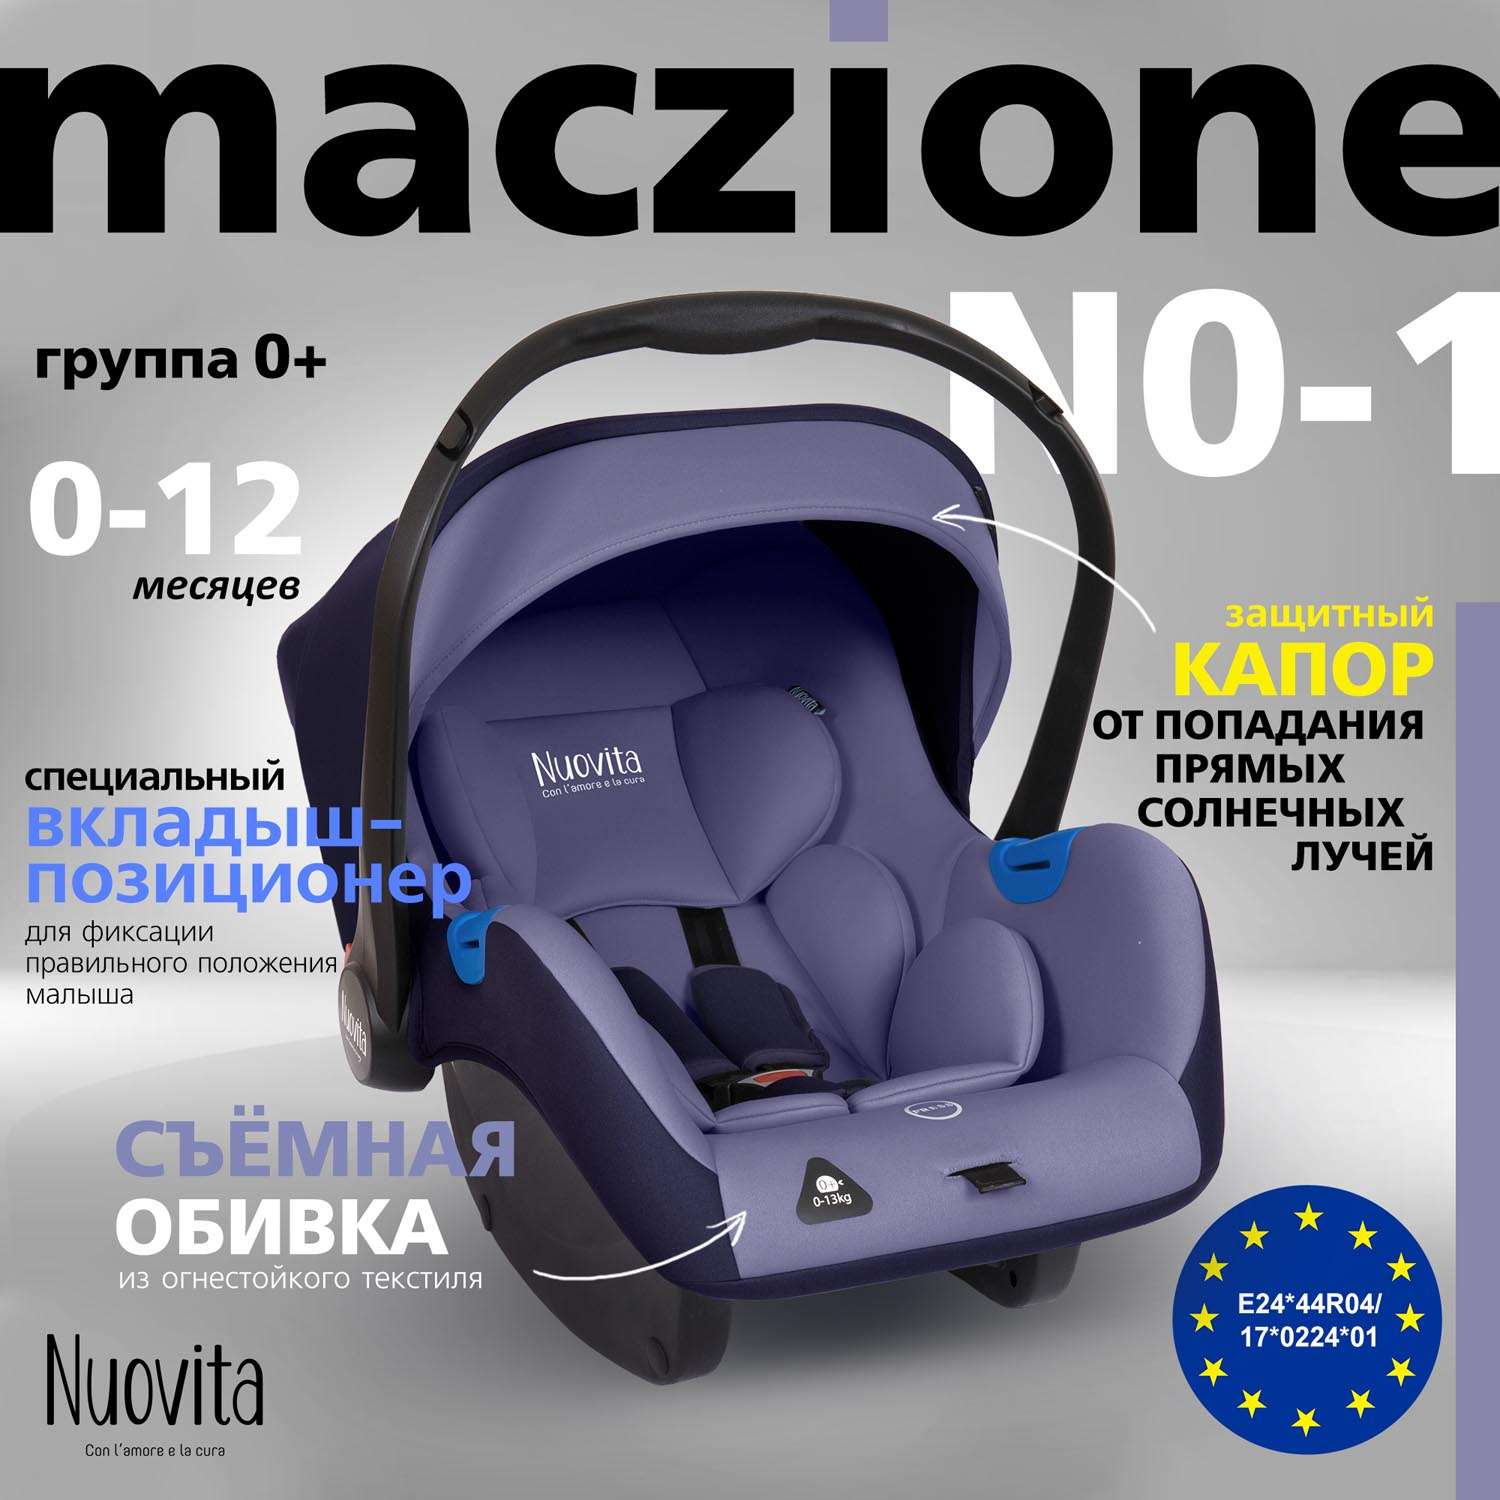 Детское автокресло Nuovita Maczione N0-1 Синий - фото 1